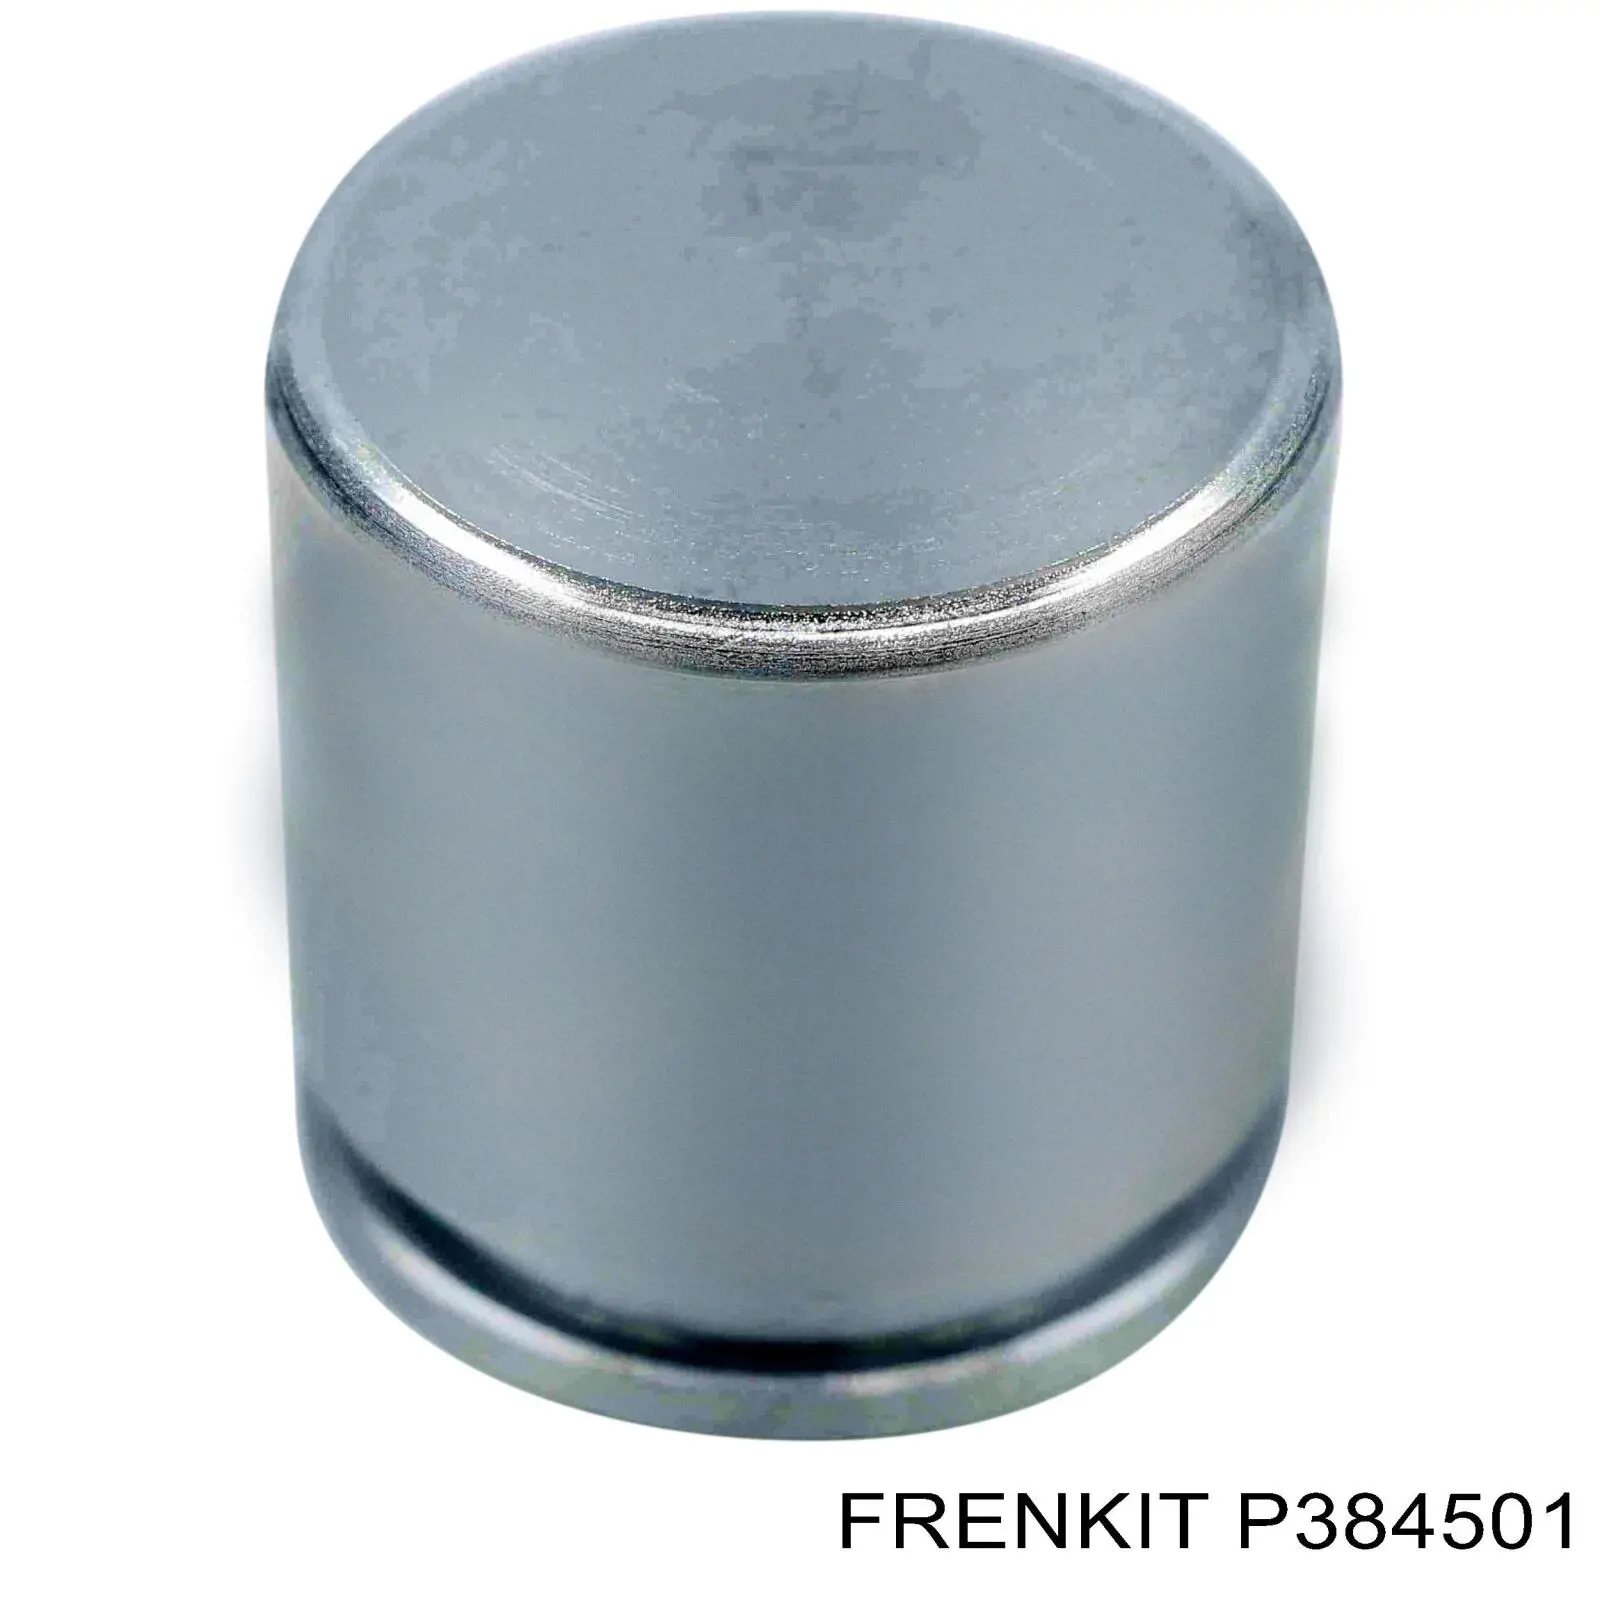 P384501 Frenkit émbolo, pinza del freno trasera